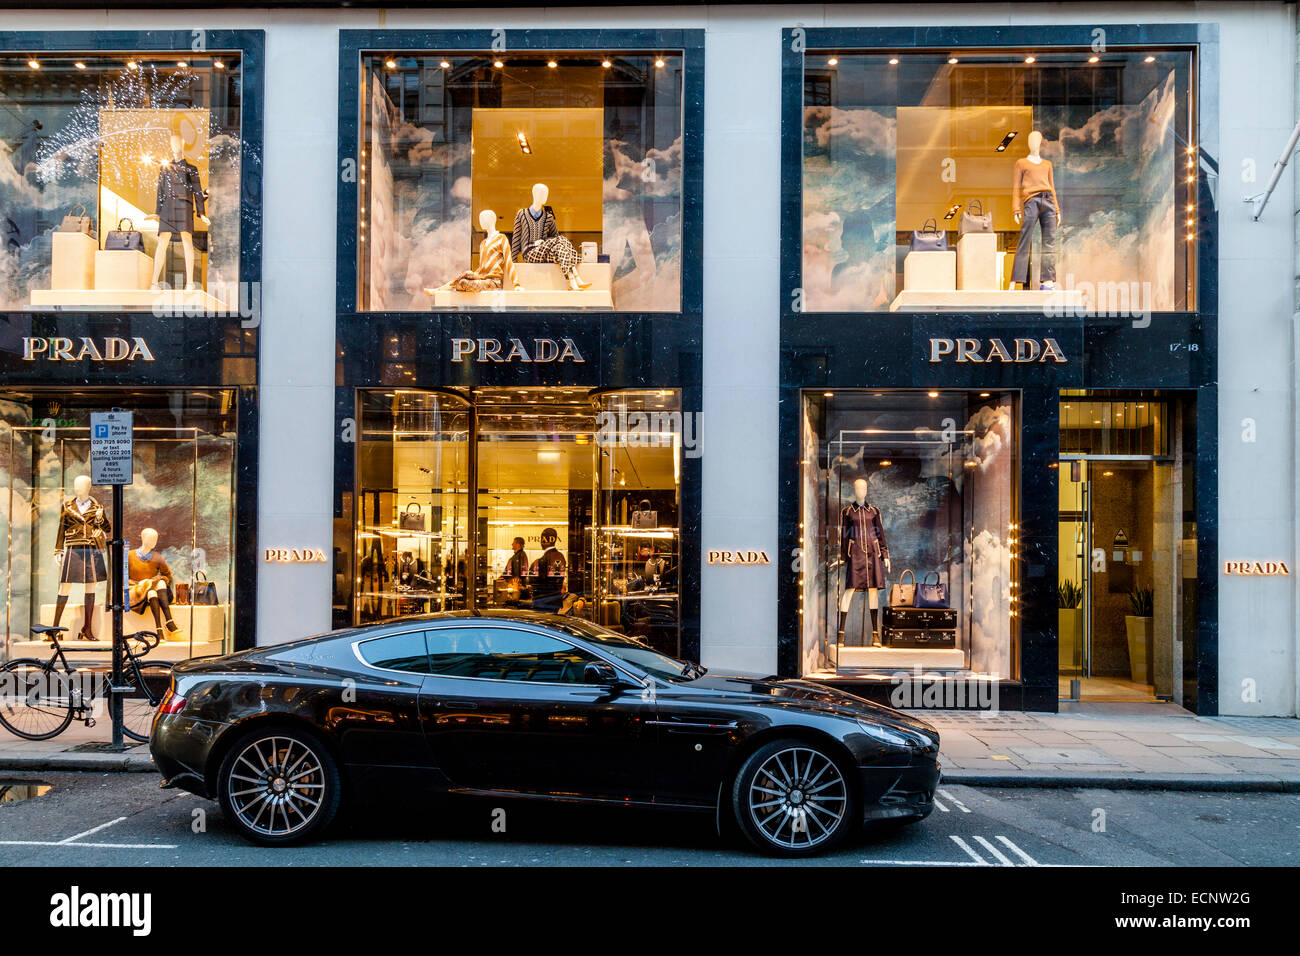 The Prada Store In Old Bond Street, London, England Stock Photo - Alamy